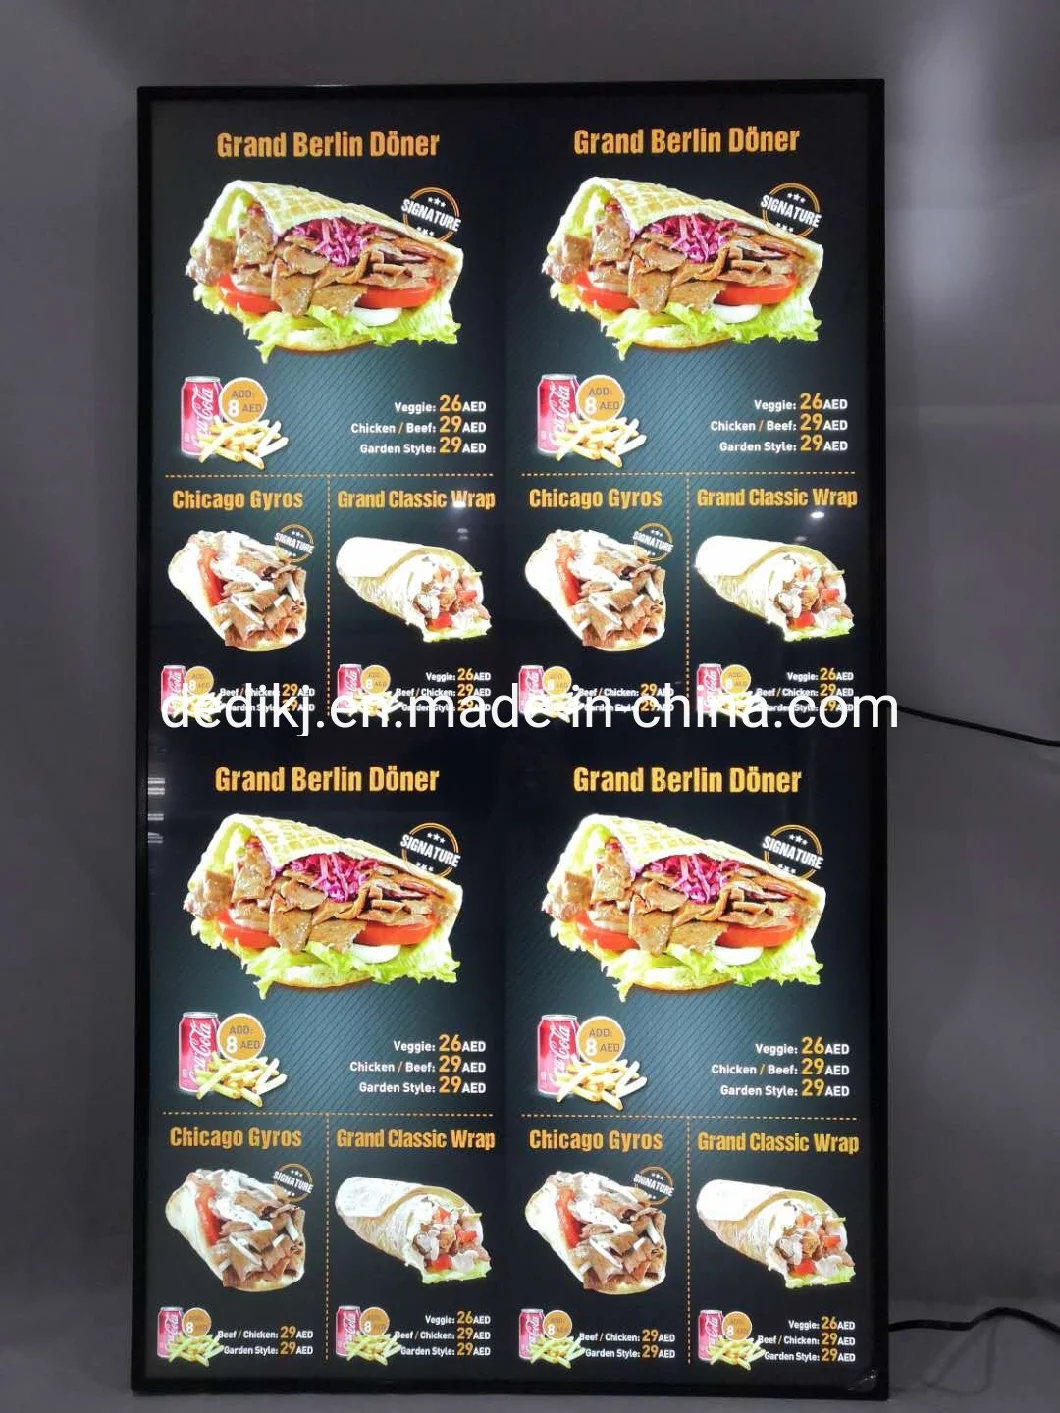 55inch Digital Menu Board for Pizza Hut Created by Embed Digital